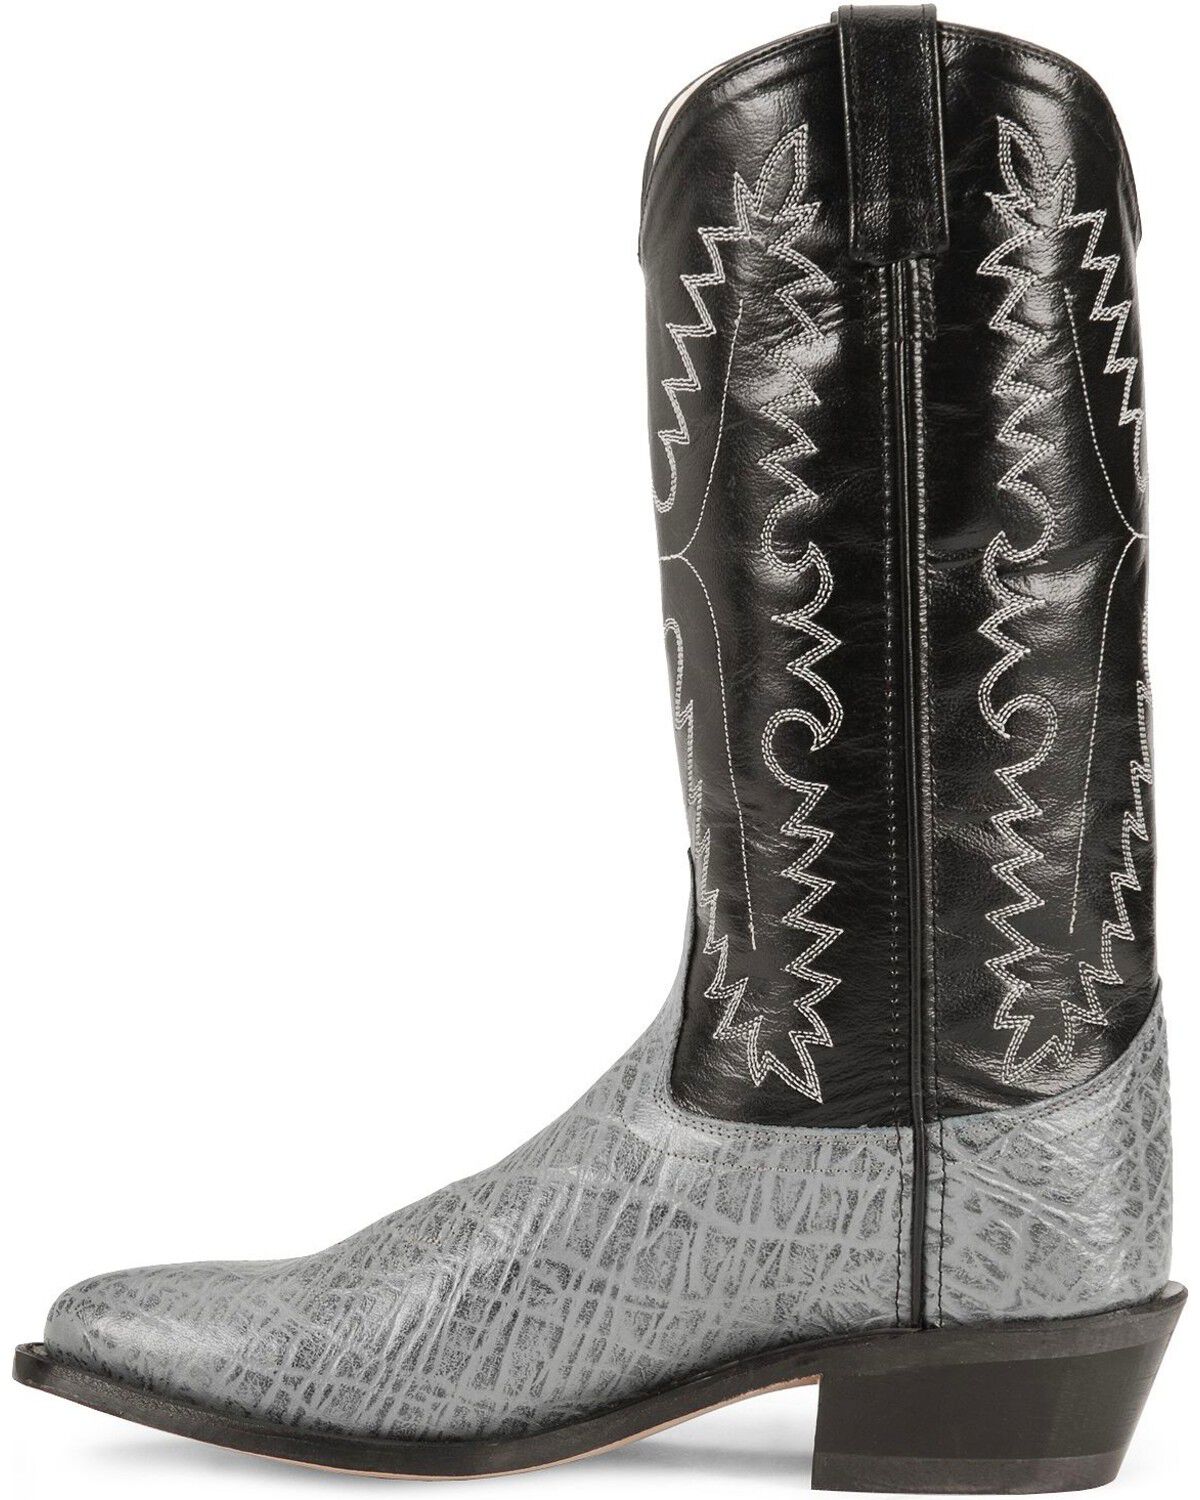 gray elephant skin boots